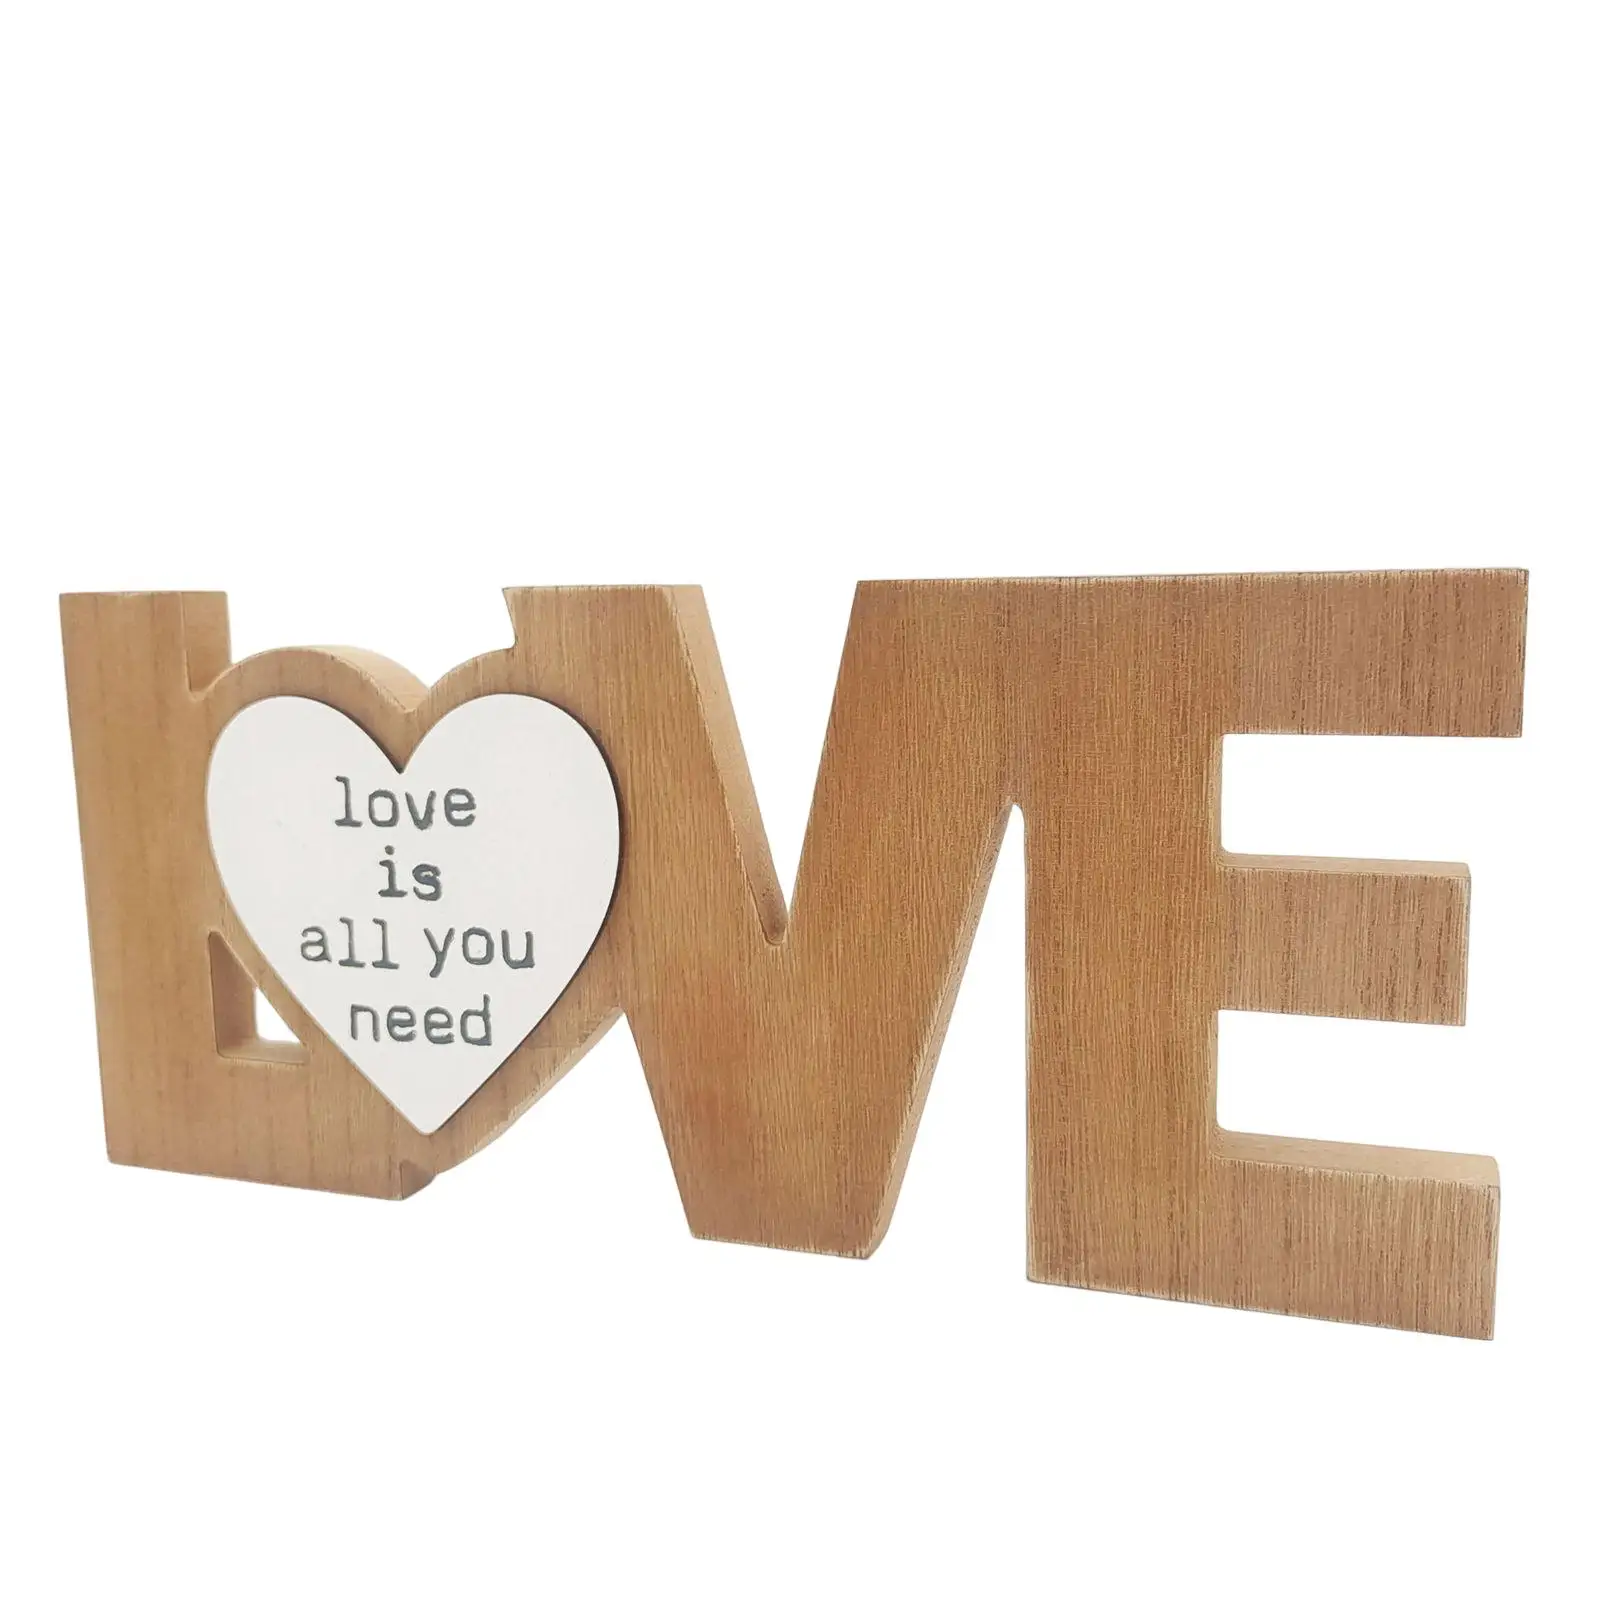 Wood Cutout Love Letters Sign Free Standing Housewarming Gift Modern Stylish